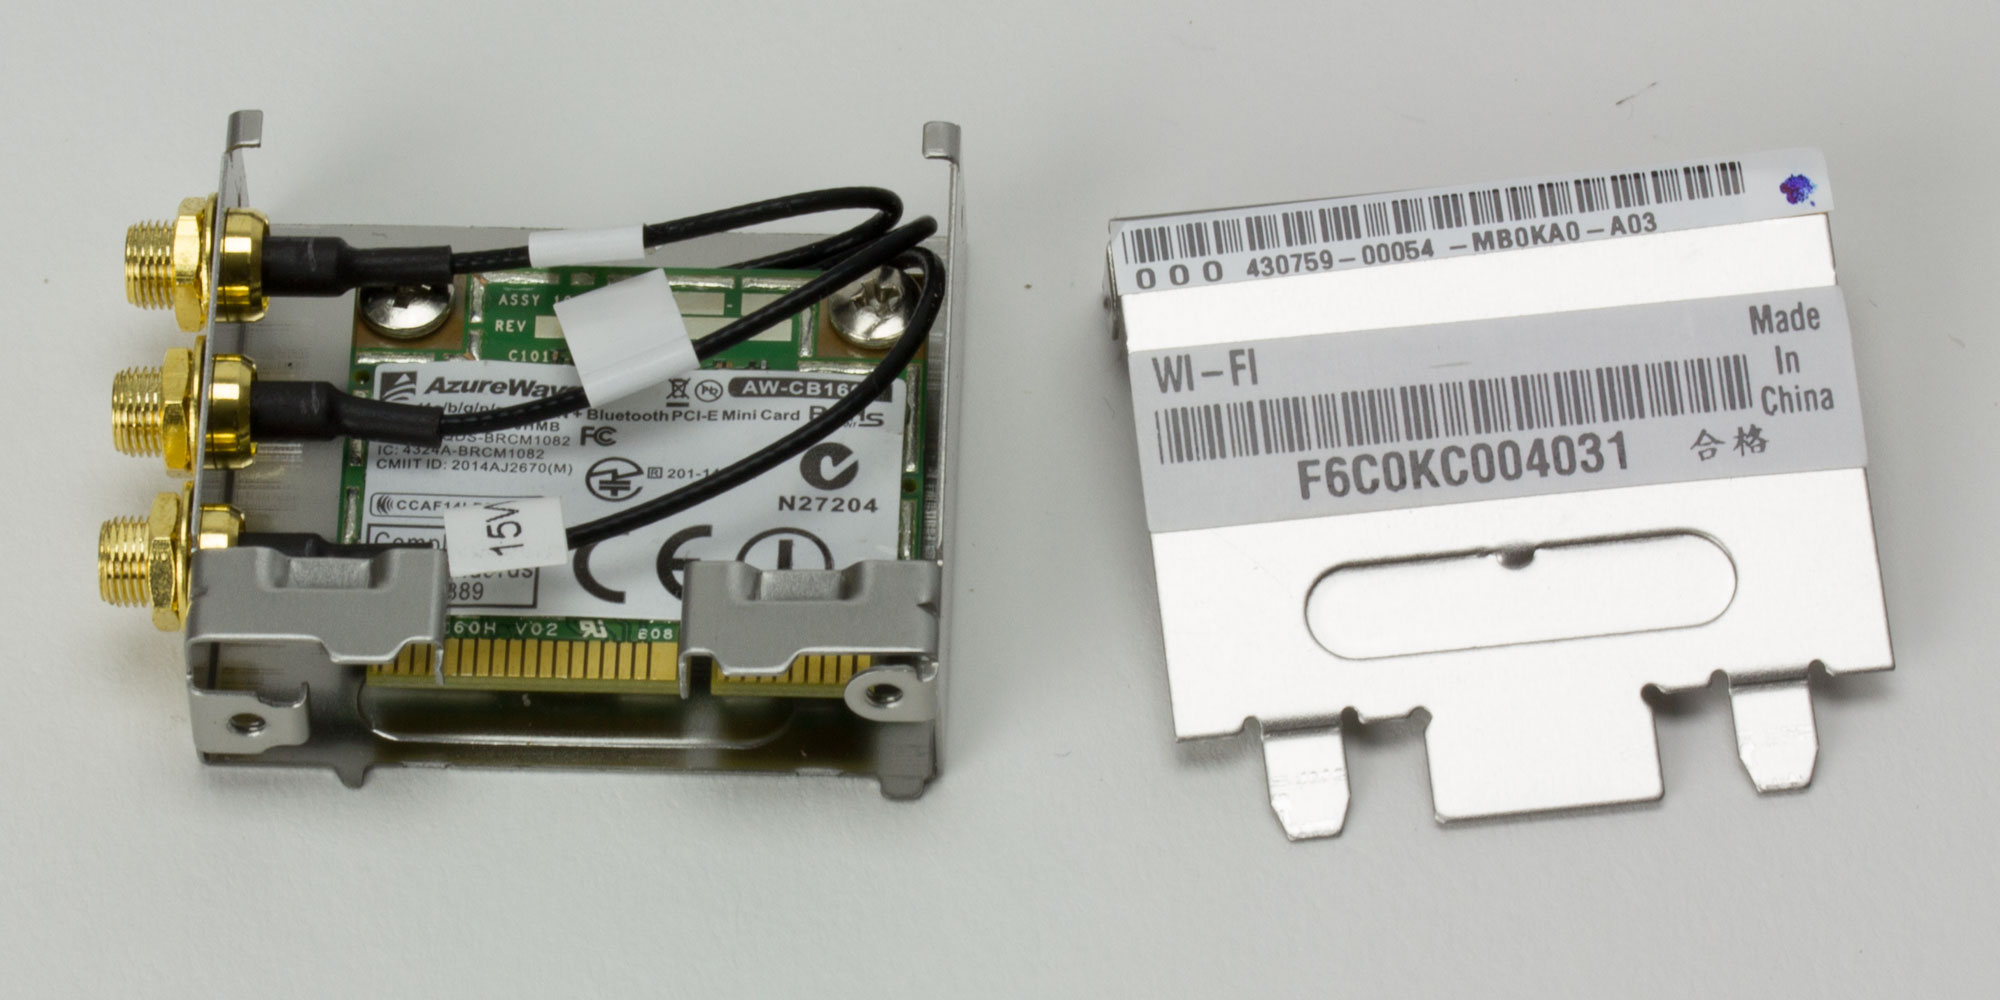 broadcom 802.11ac network adapter specs